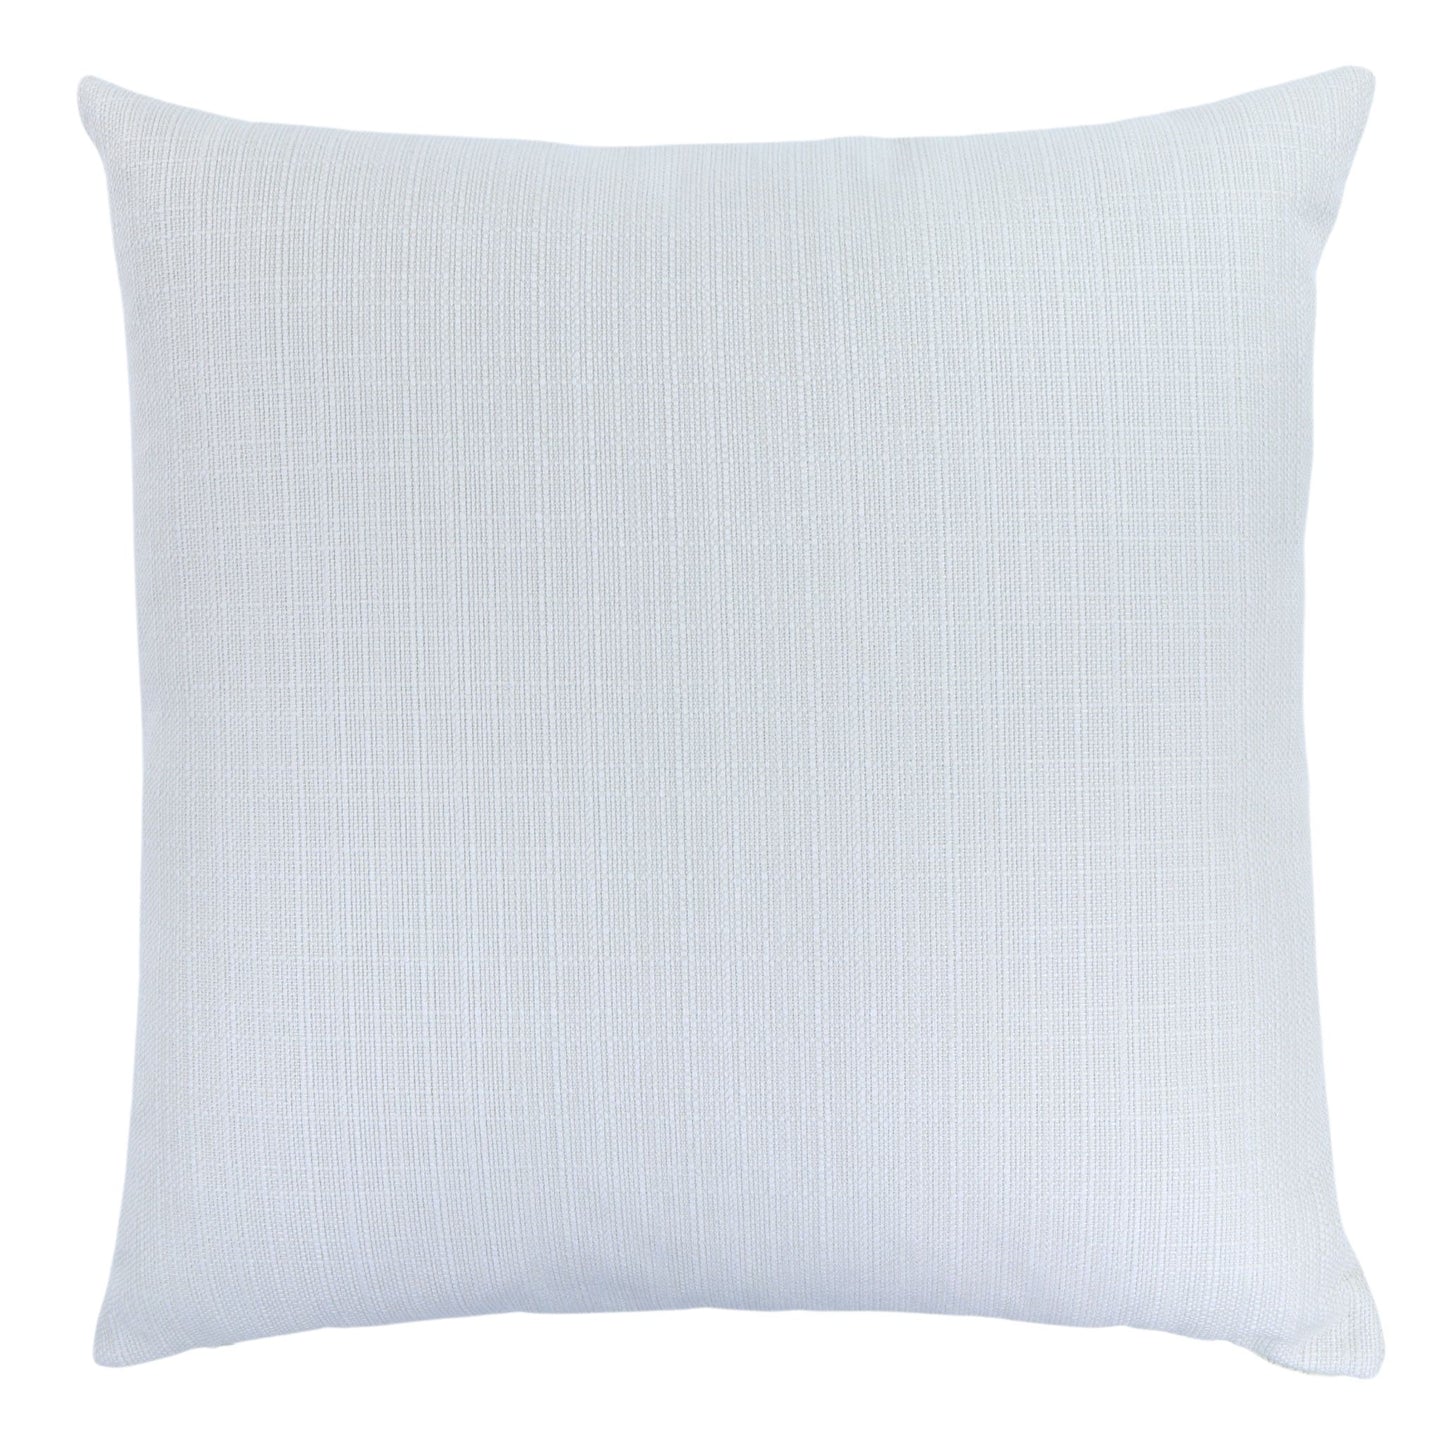 Neutral Linen Throw Pillow with Trim Appliqué